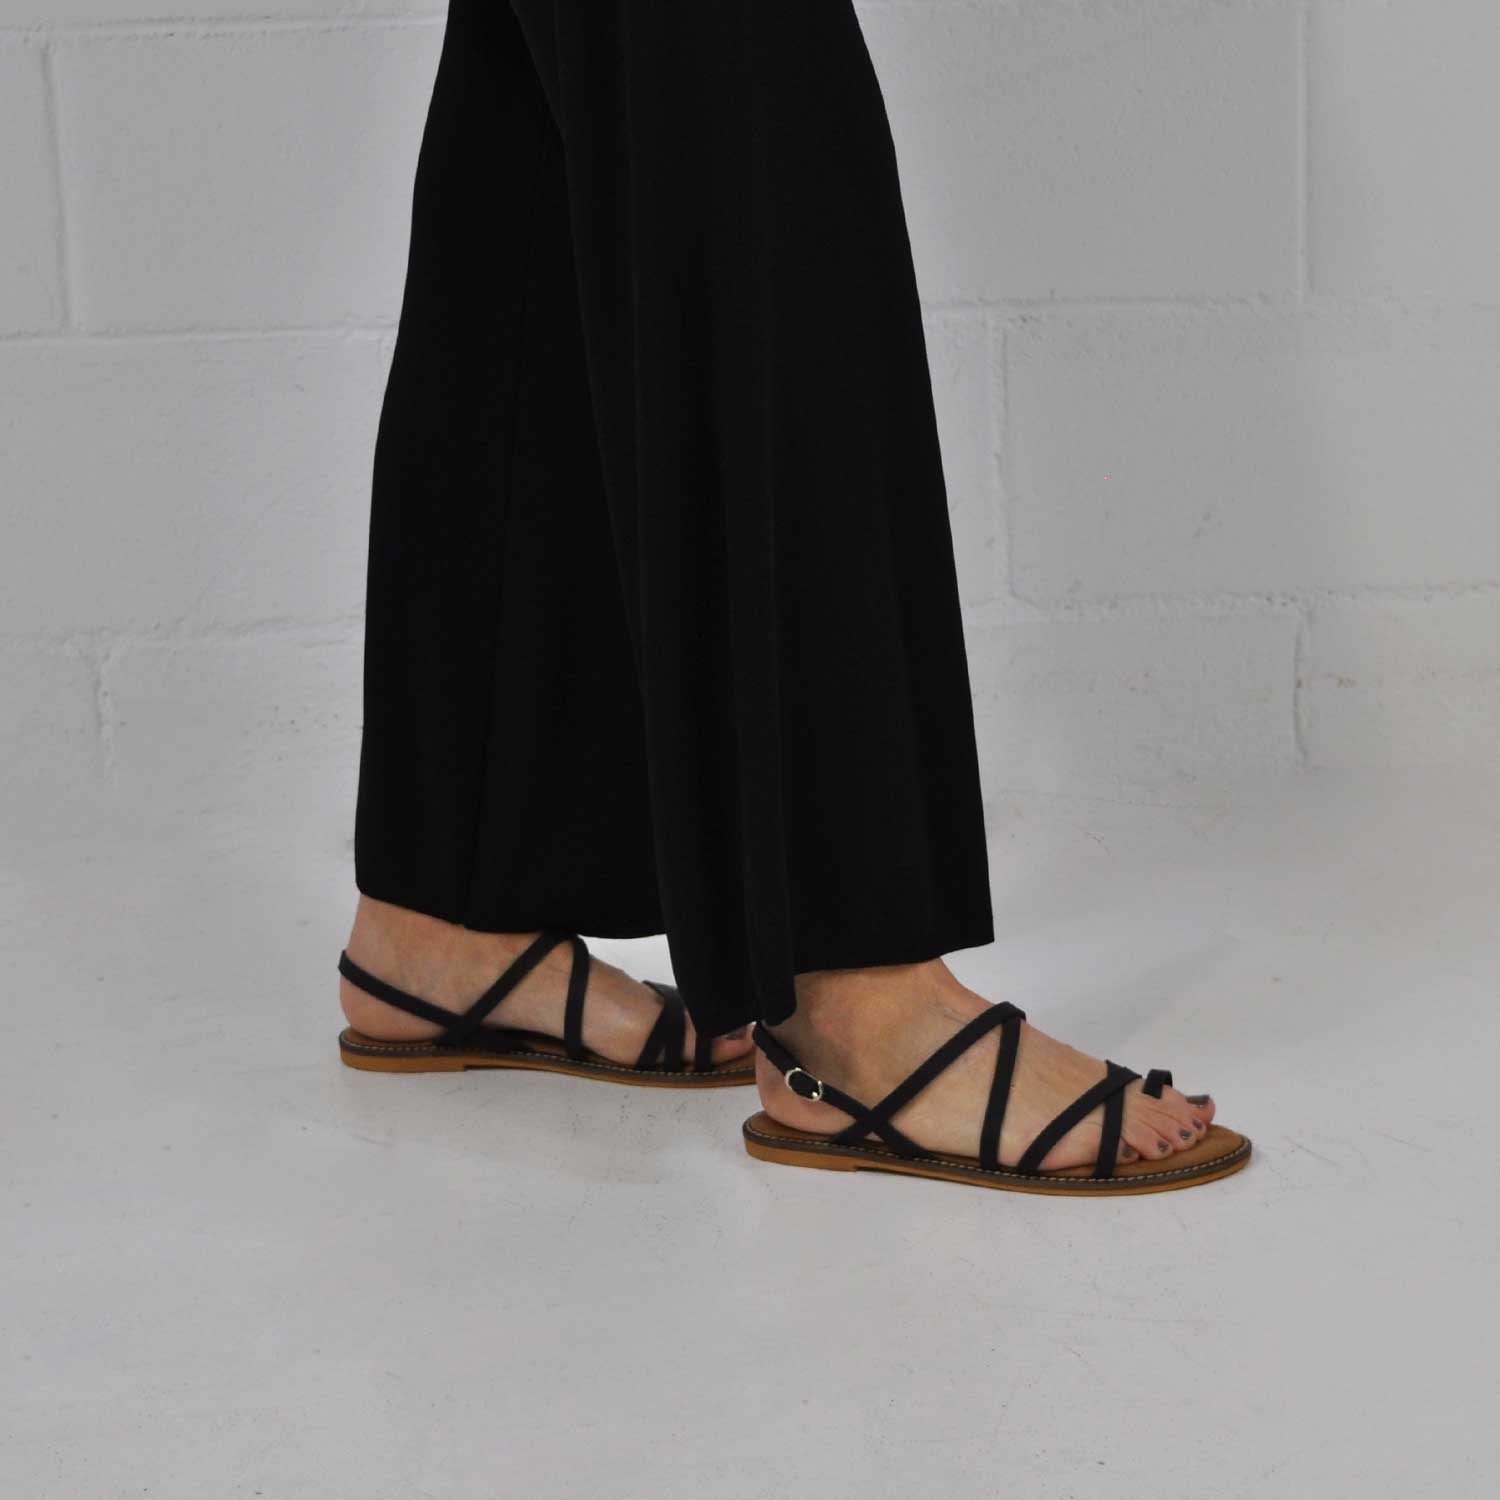 Black straps sandal